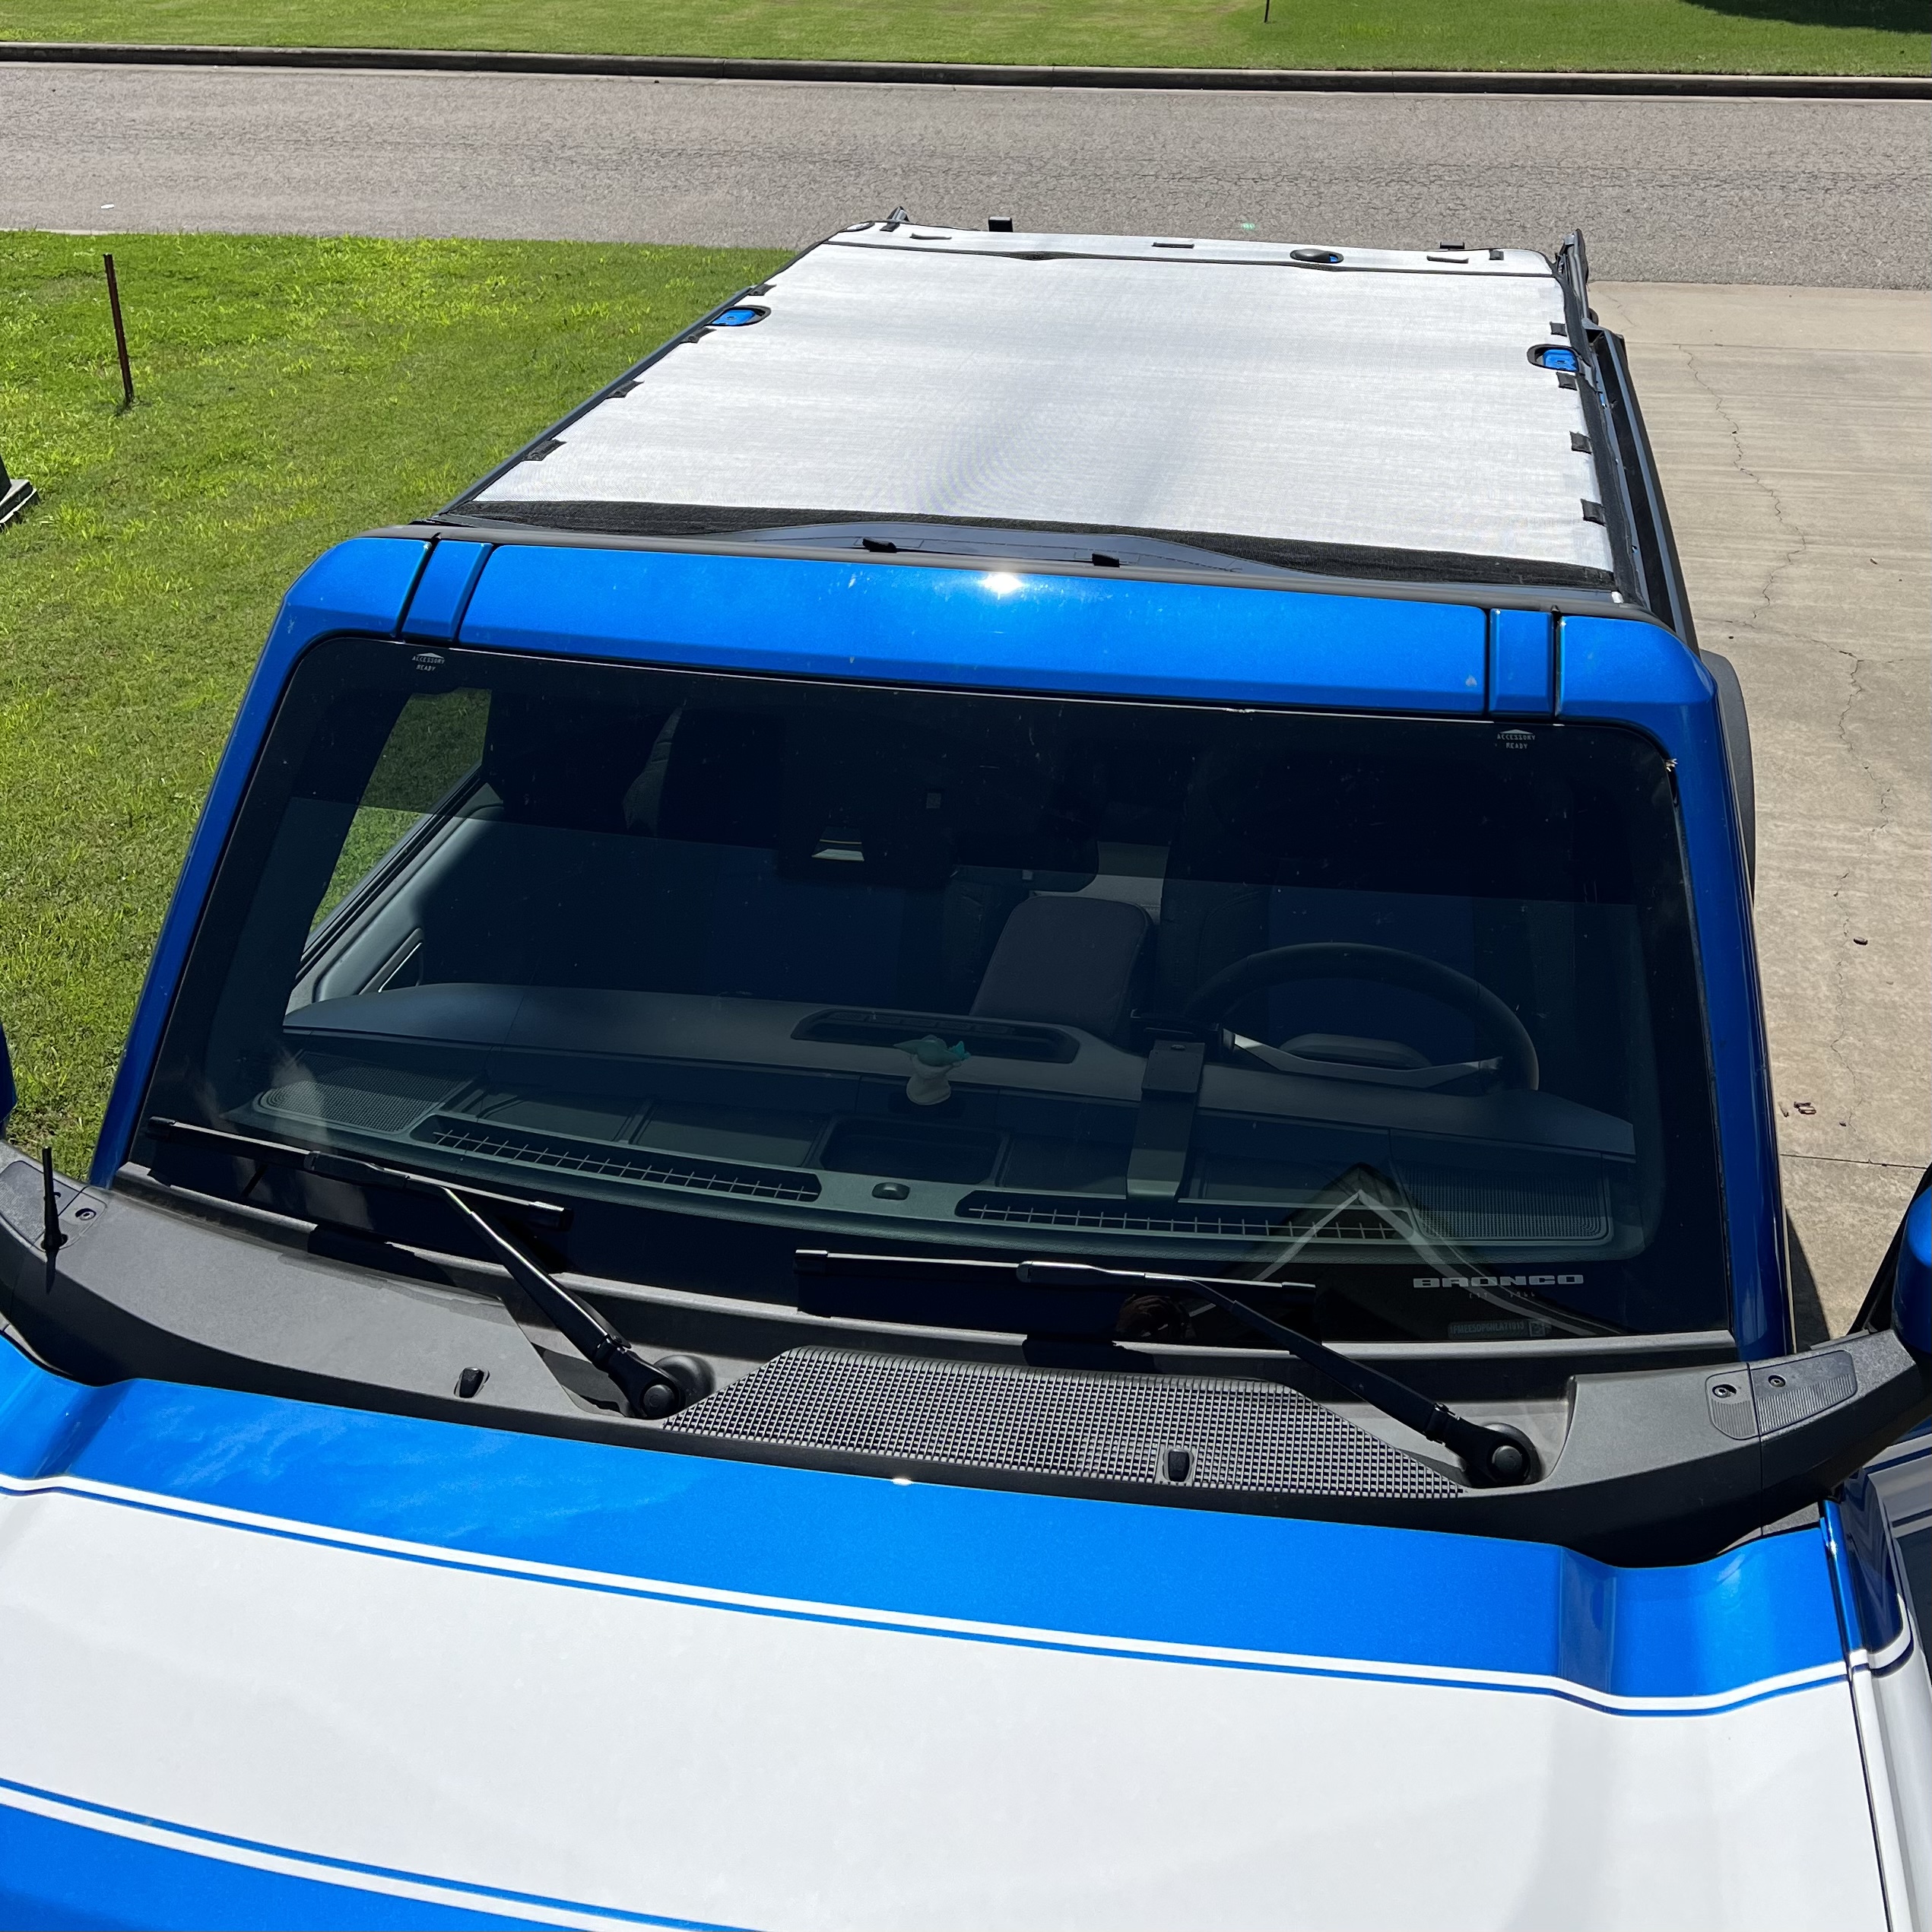 Ford Bronco JTopsUSA Announces Bimini Sun Shades for the 2/4 door hard tops! 3A069DD9-7AE0-4905-B4C8-A0D385A8548B